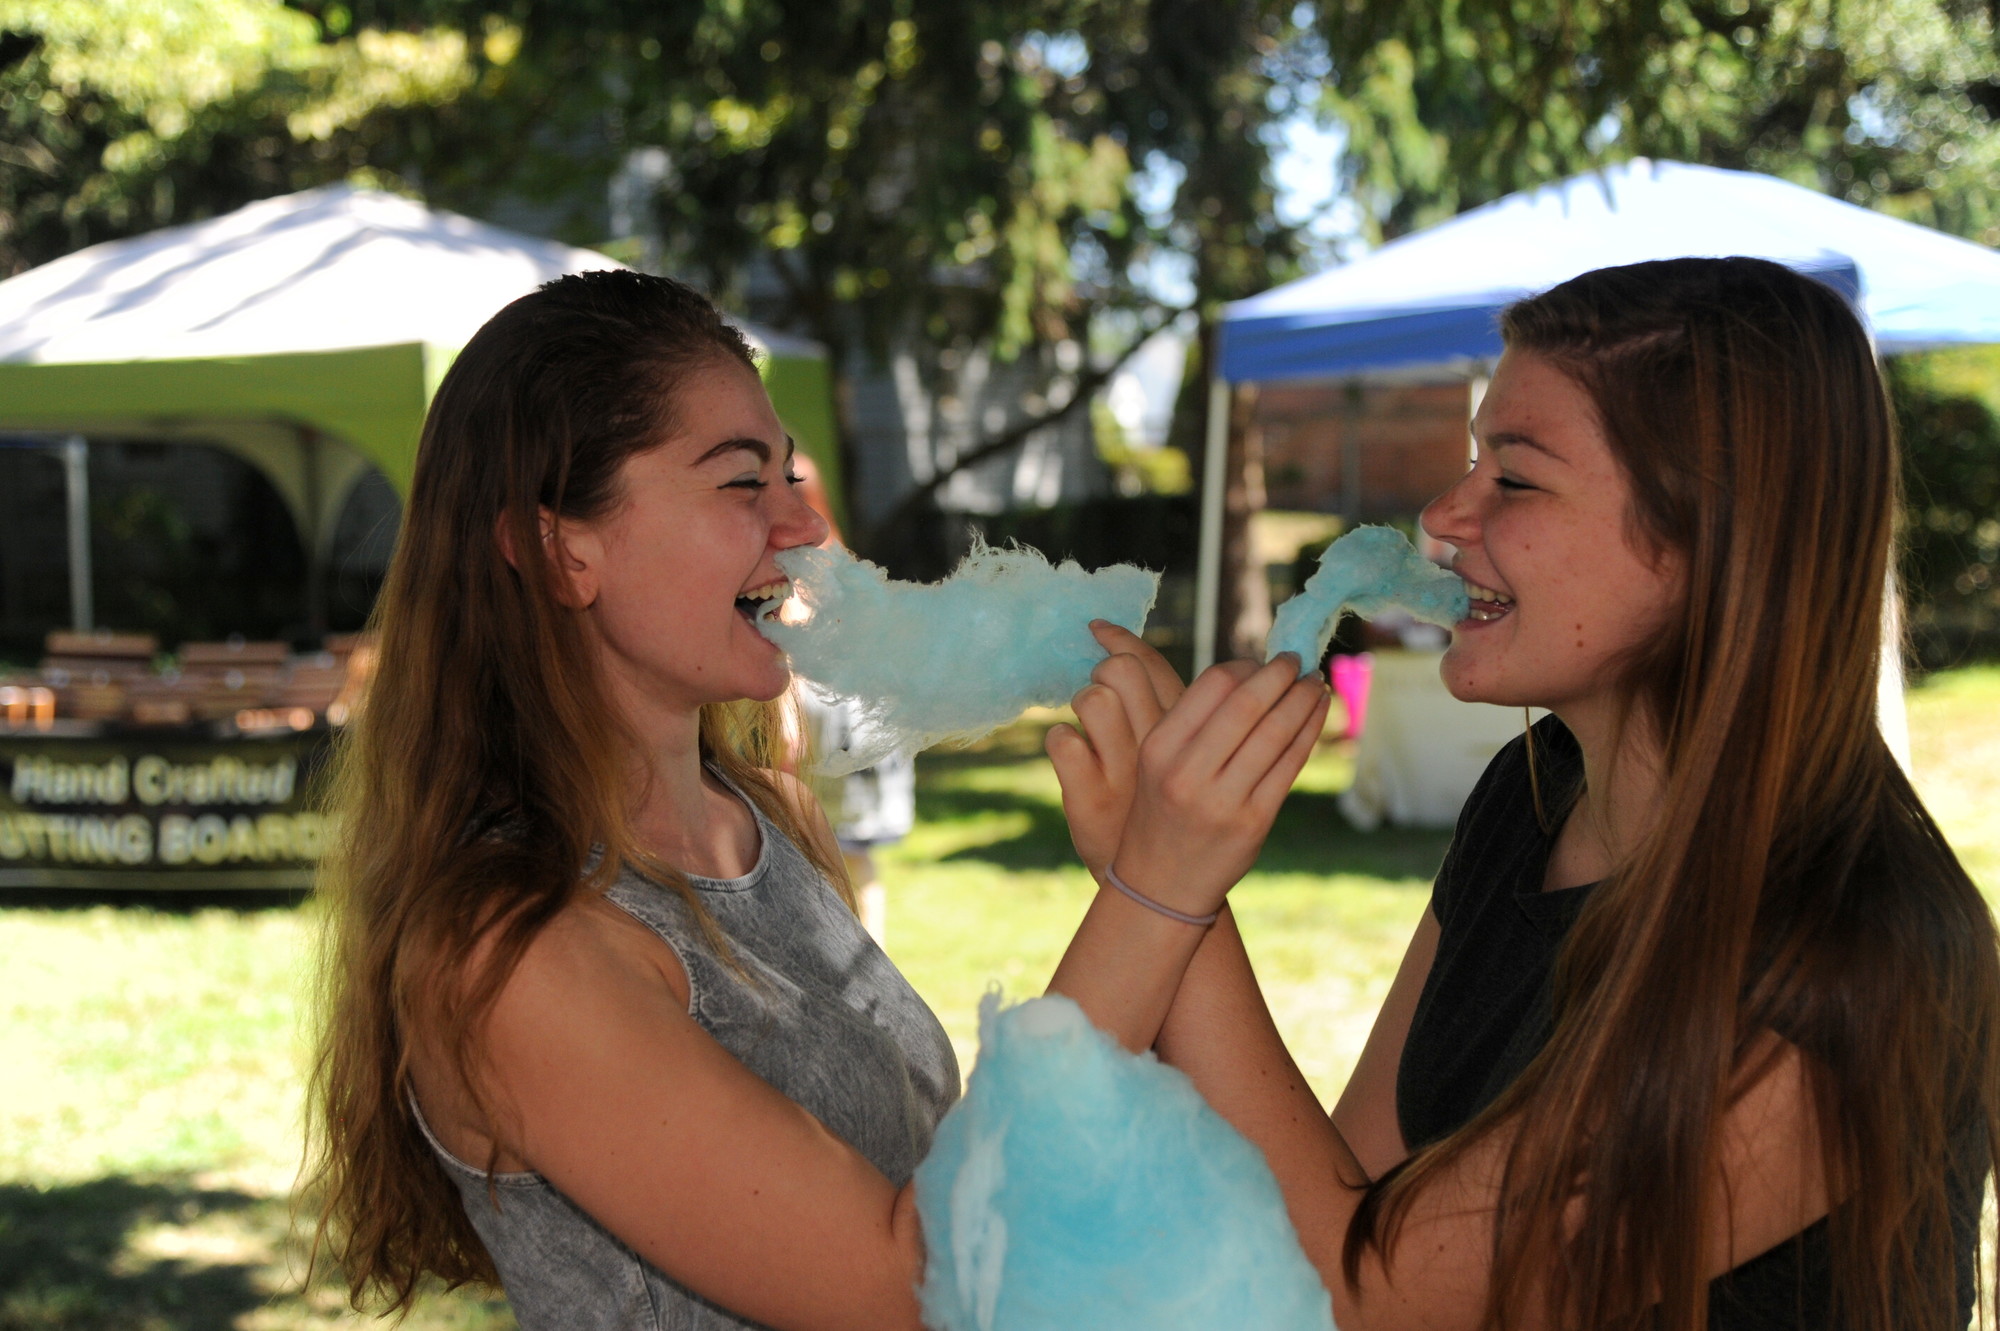 Elyse Klewicki, 18, and Kyra Kraus, 17, shared a sugary snack.